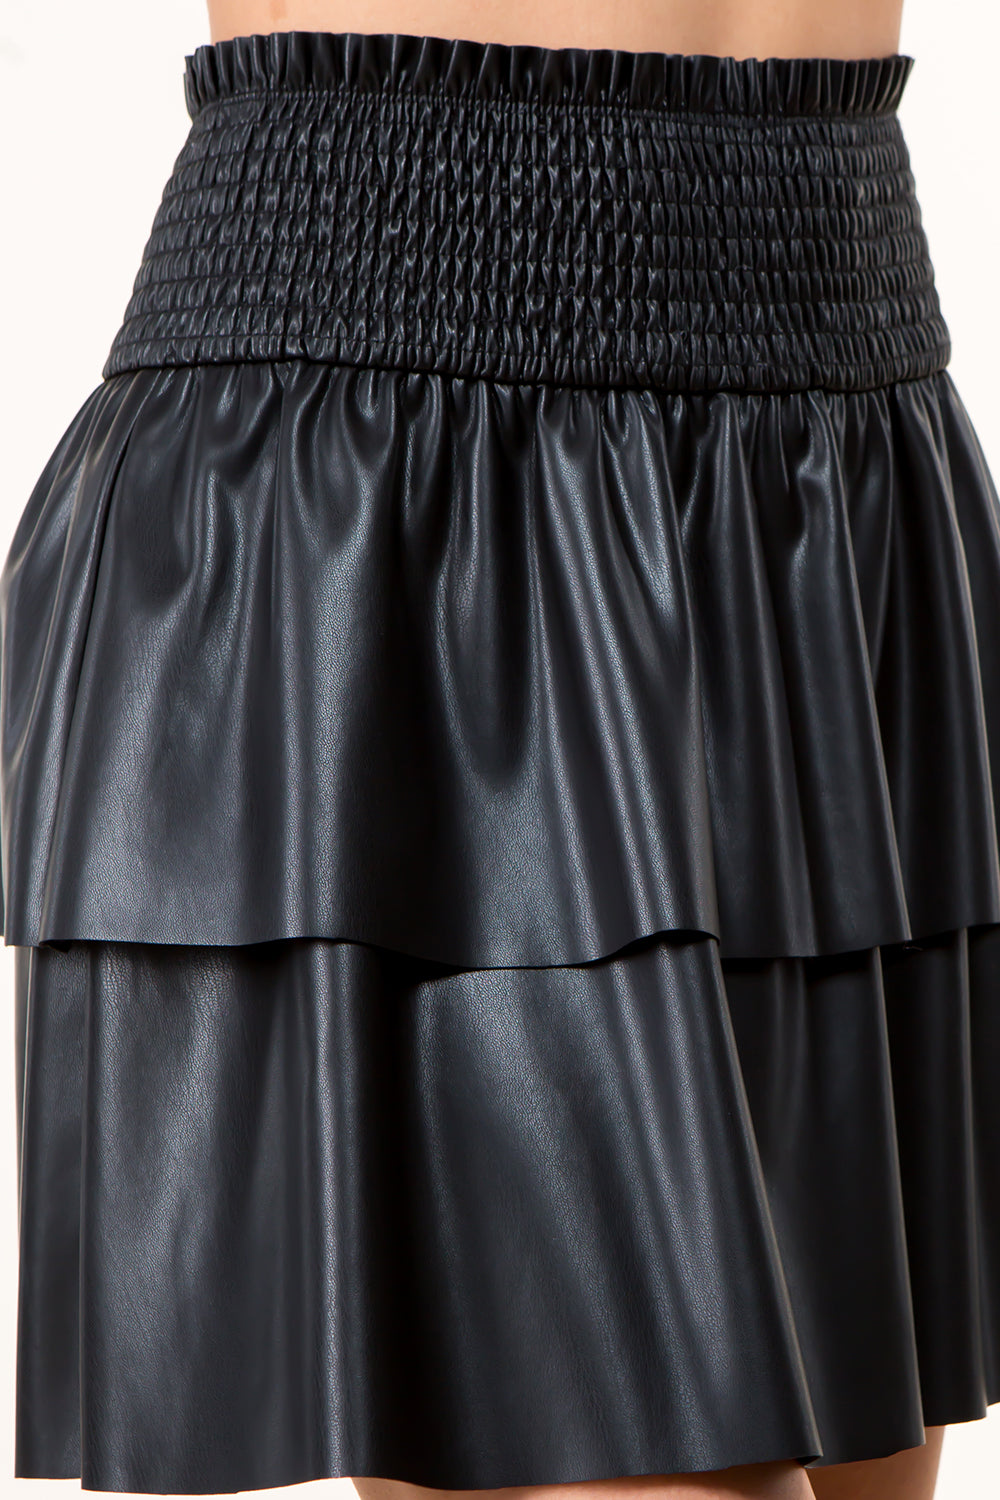 PU Leather Smocking Skirt